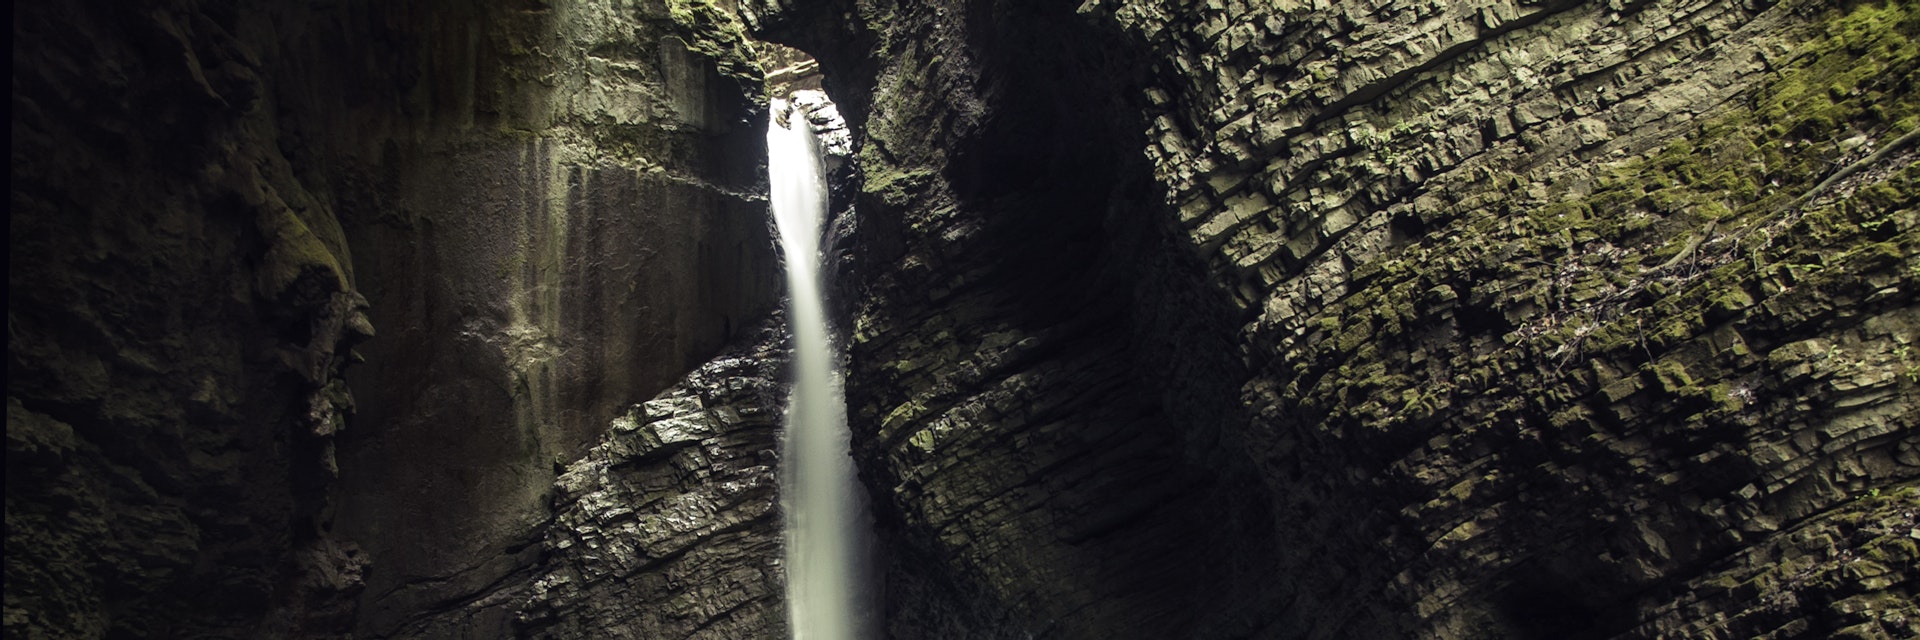 One of Slovenia's hidden gems, waterfall Kozjak,.Kobarid region, Soča valley, Slovenia.